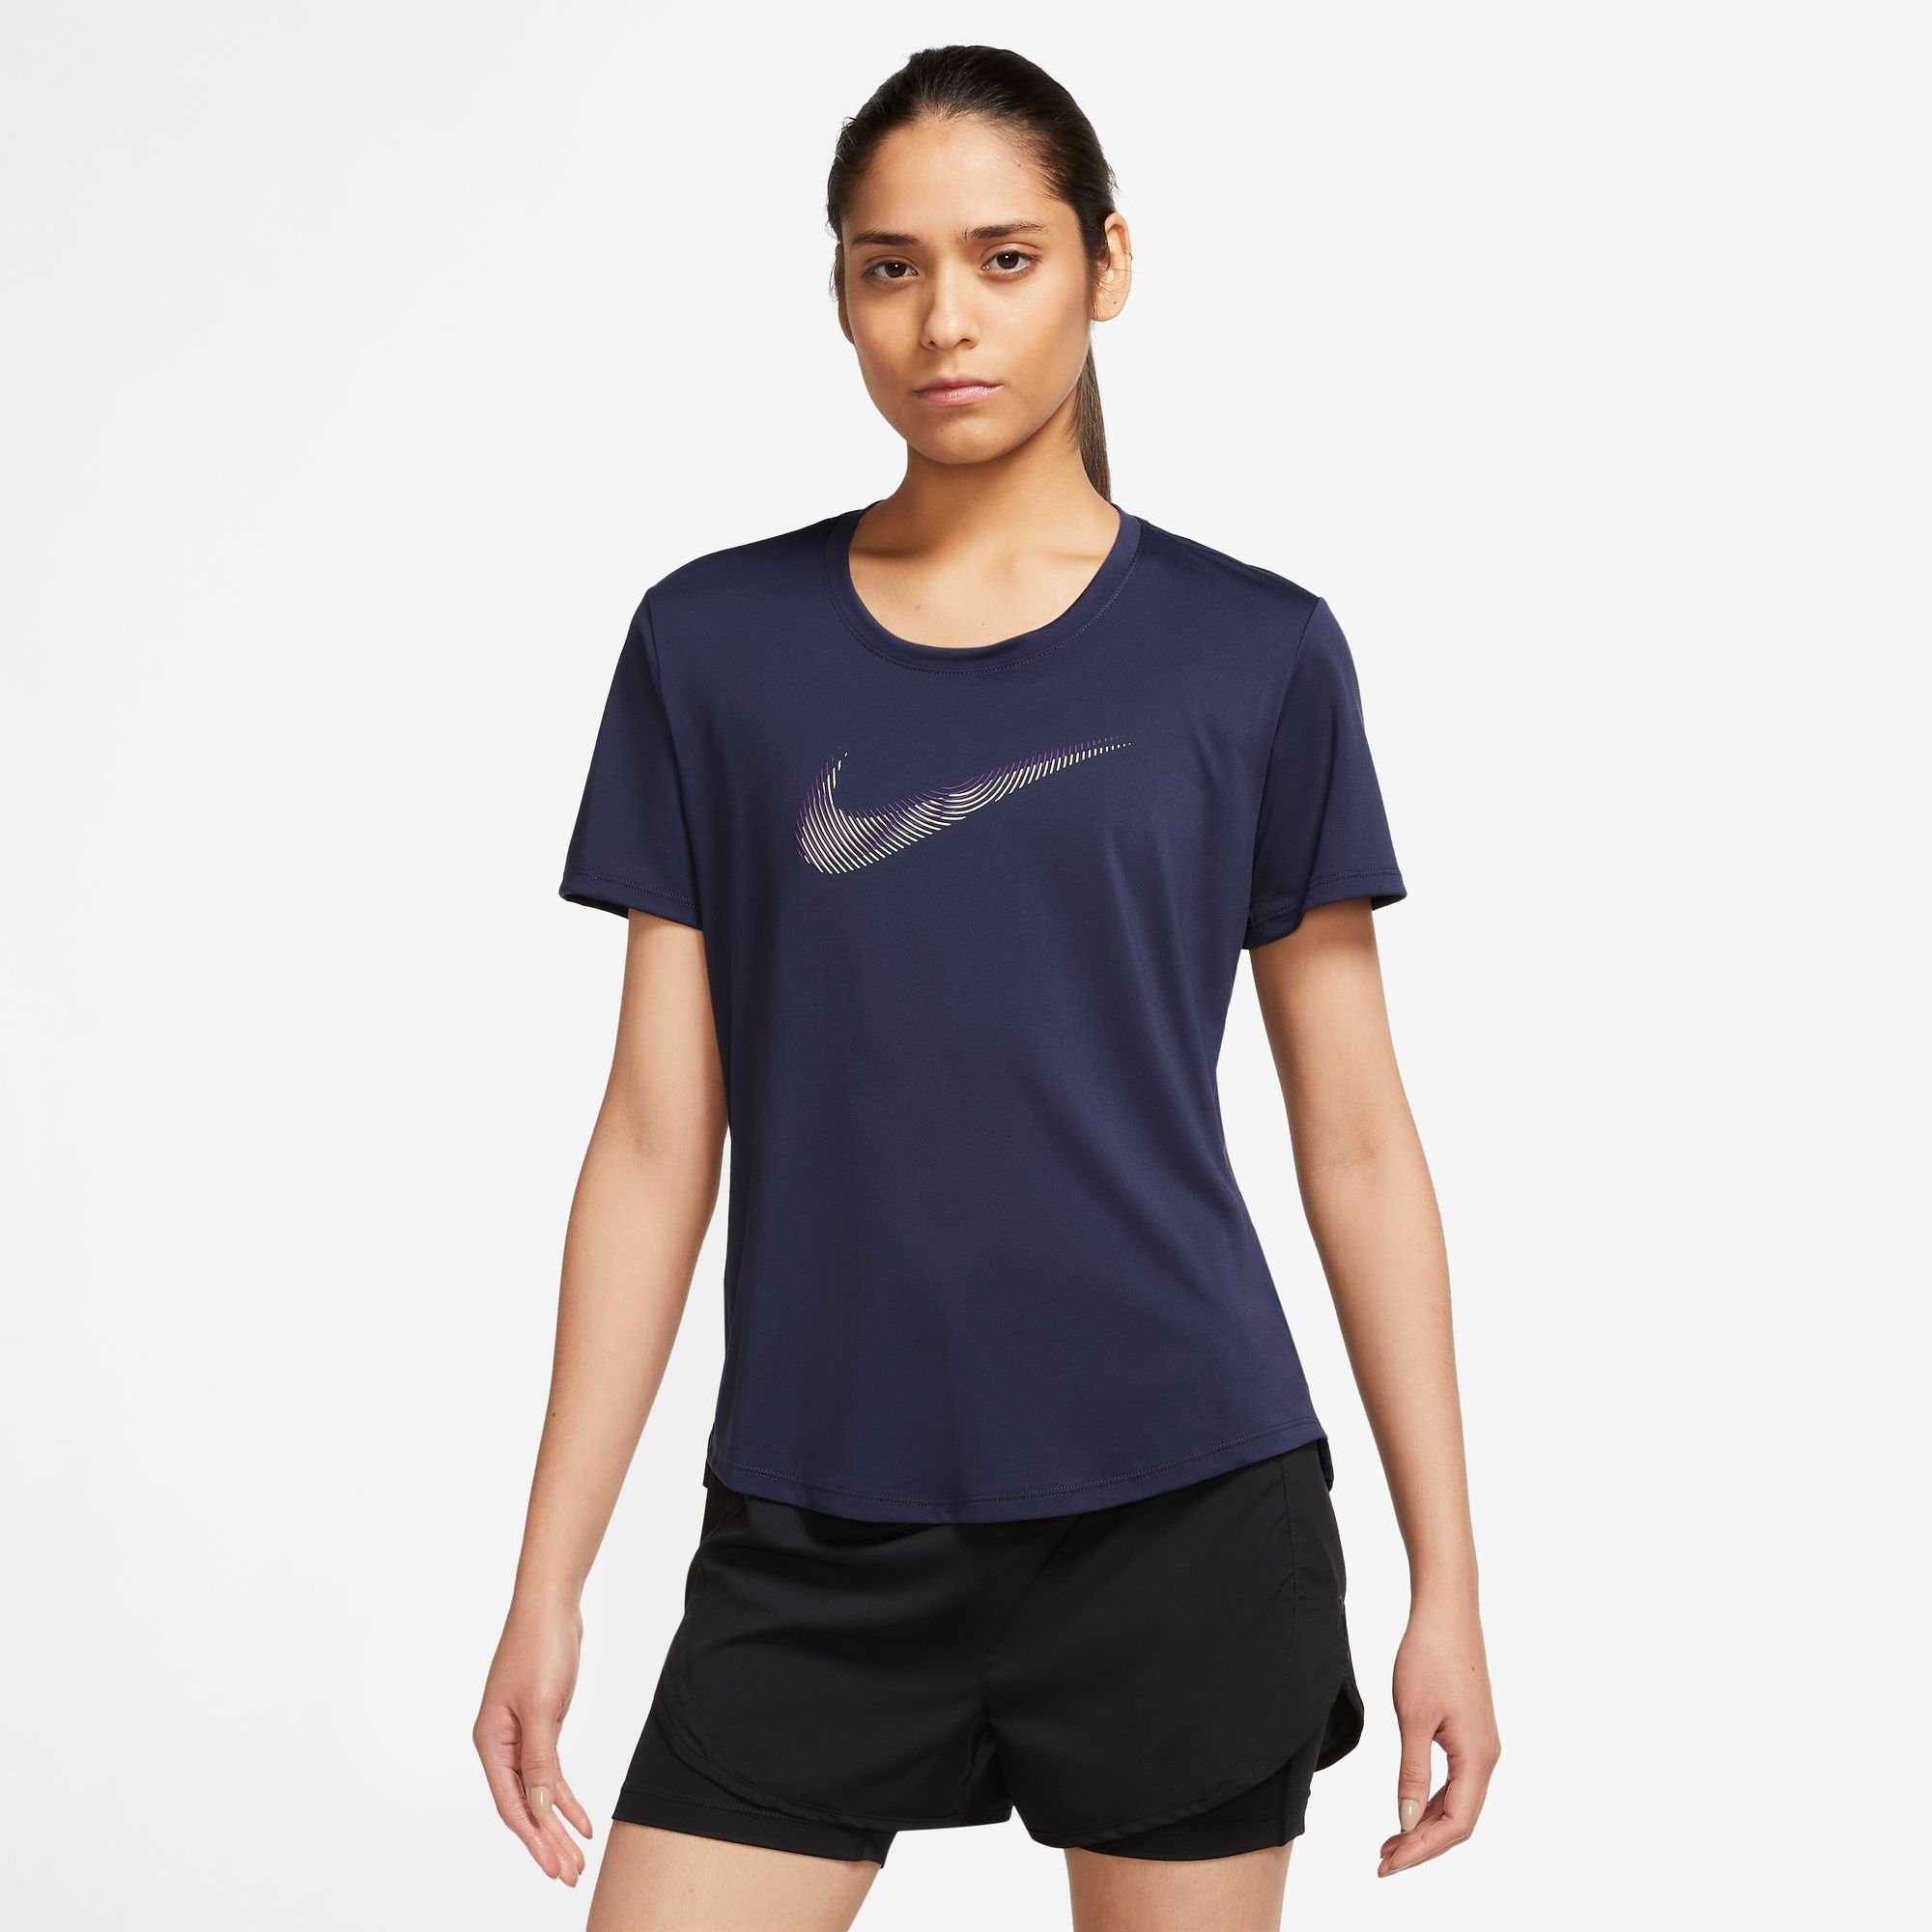 SWOOSH DRI-FIT RUNNING SHORT-SLEEVE Laufshirt PURPLE Nike PURPLE TOP WOMEN'S INK/DISCO